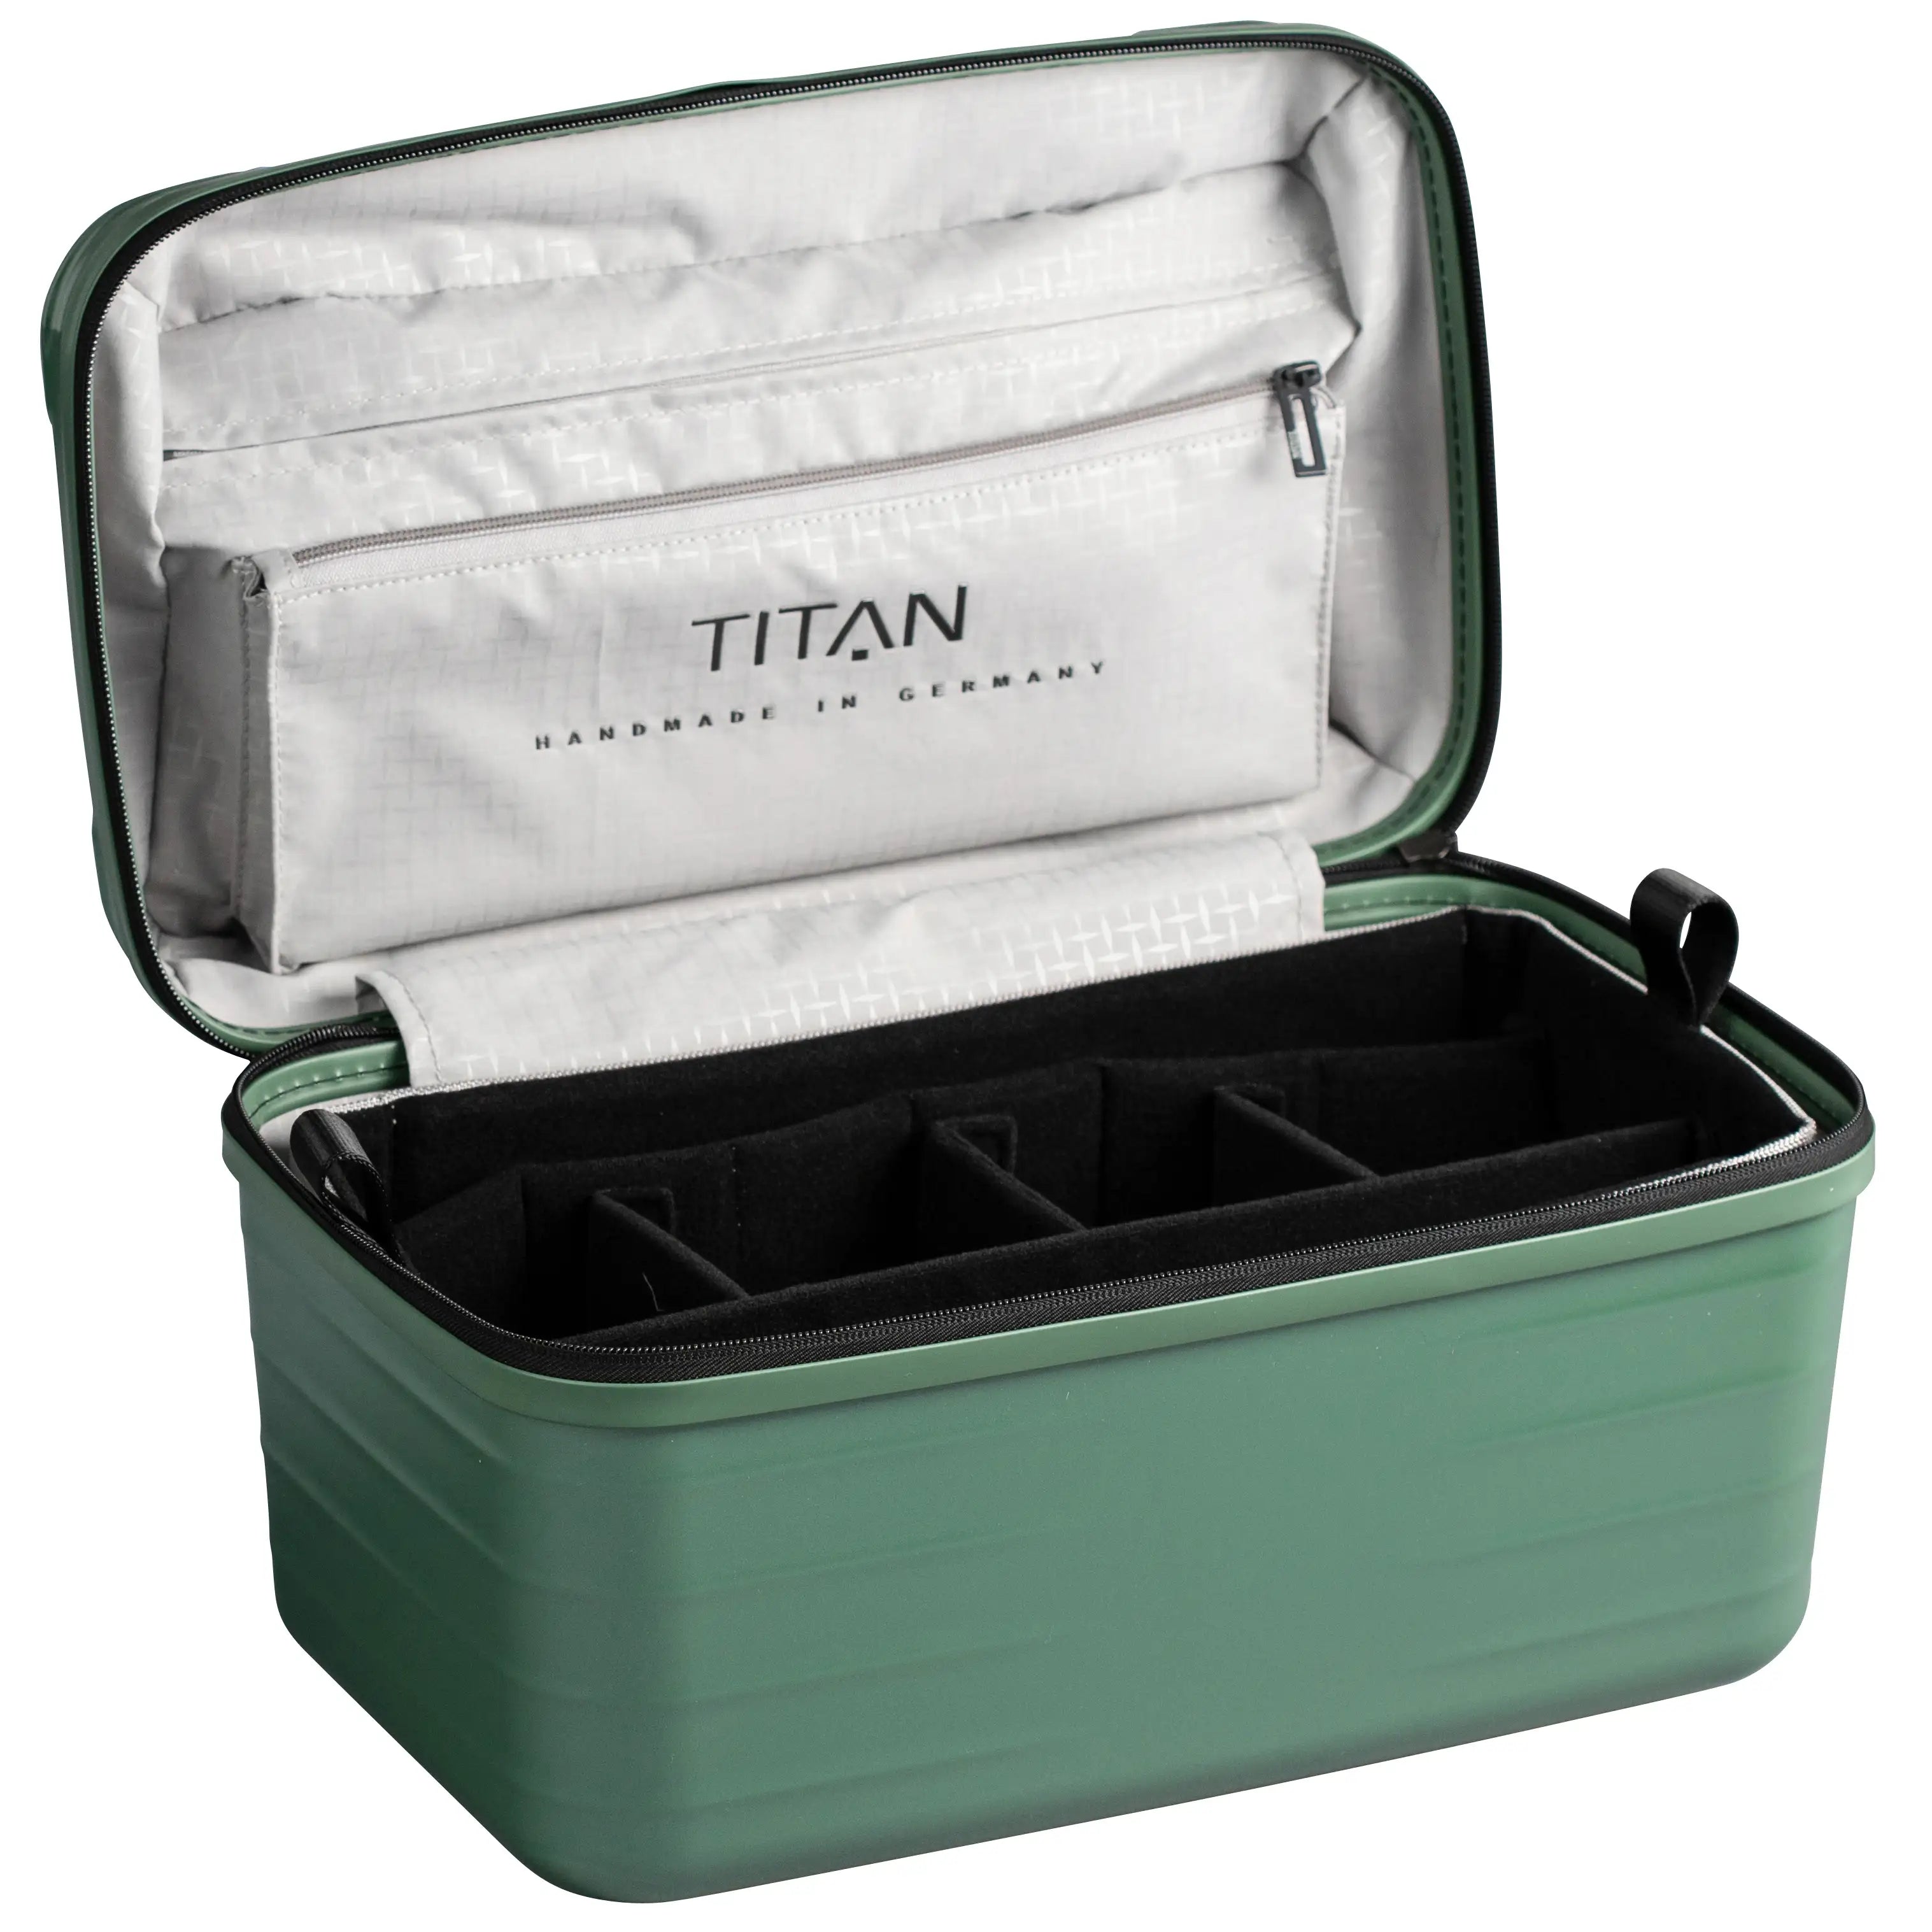 Titan Litron Beautycase - Grape green